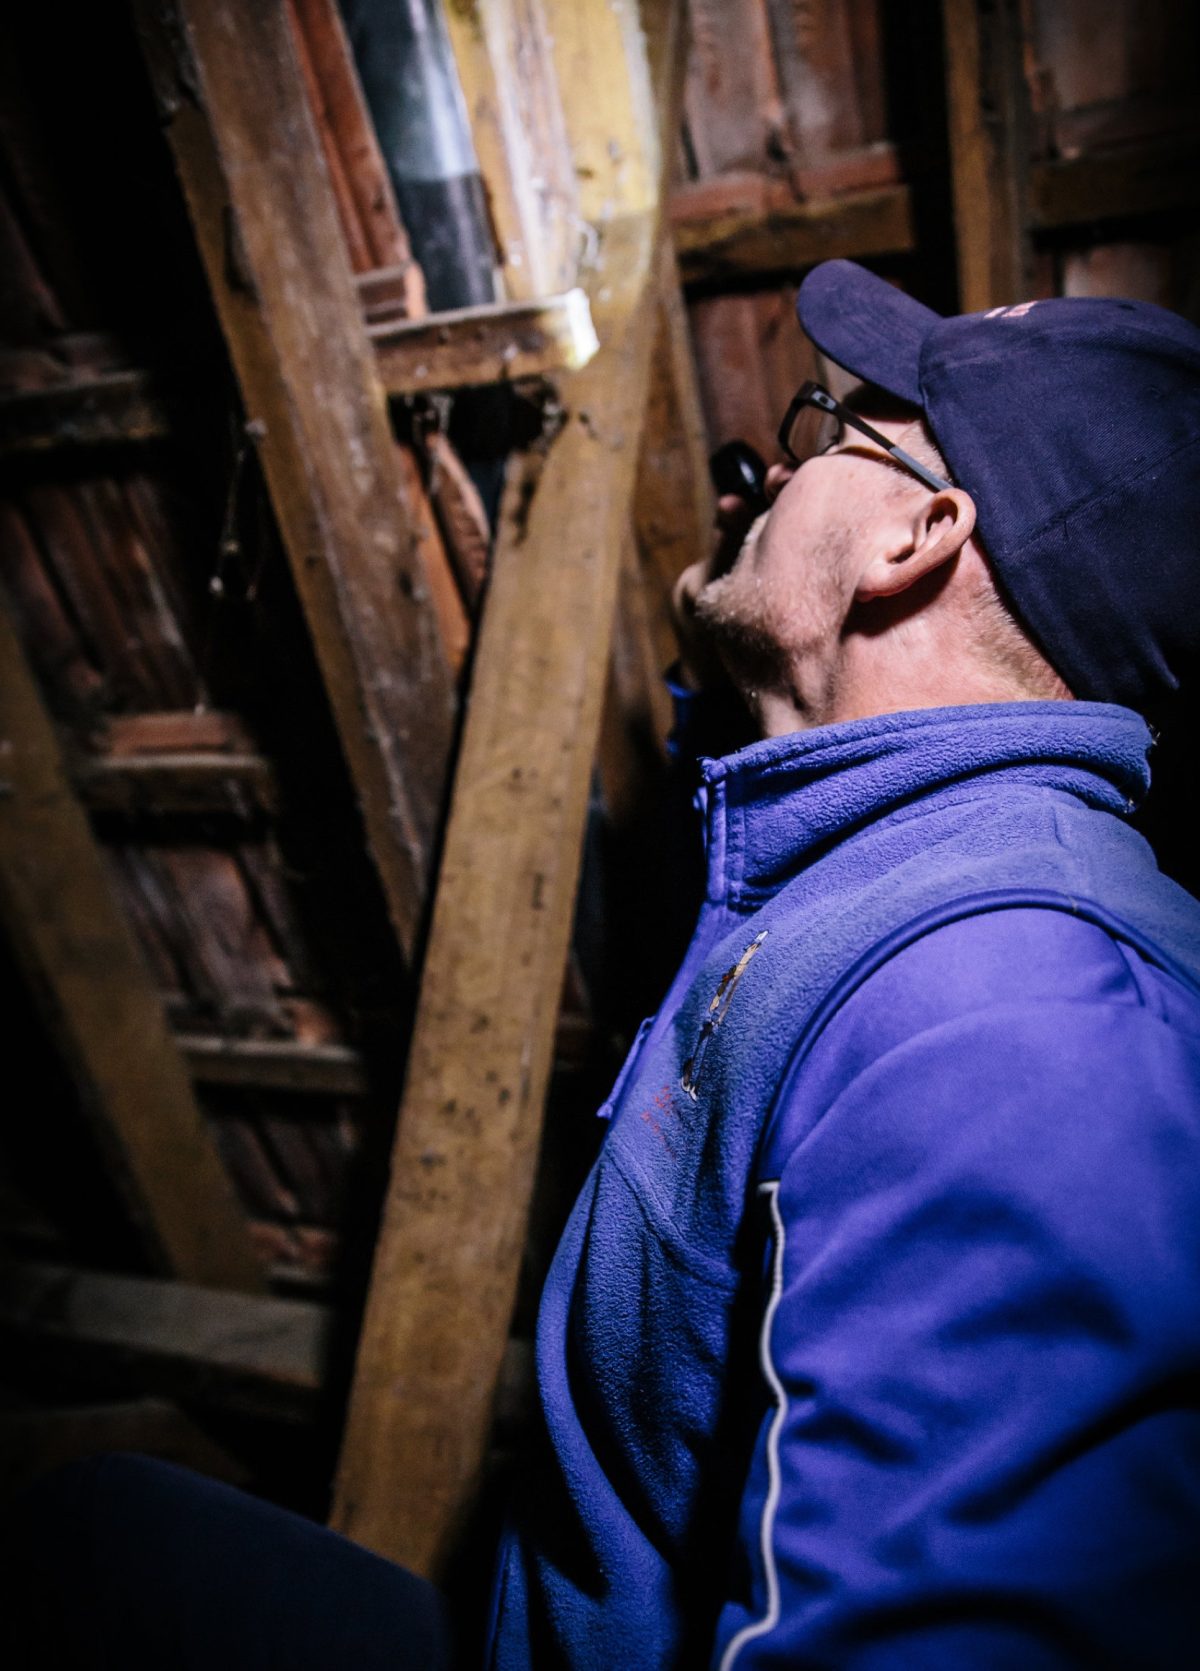 Conducting a termite inspection in the attic.